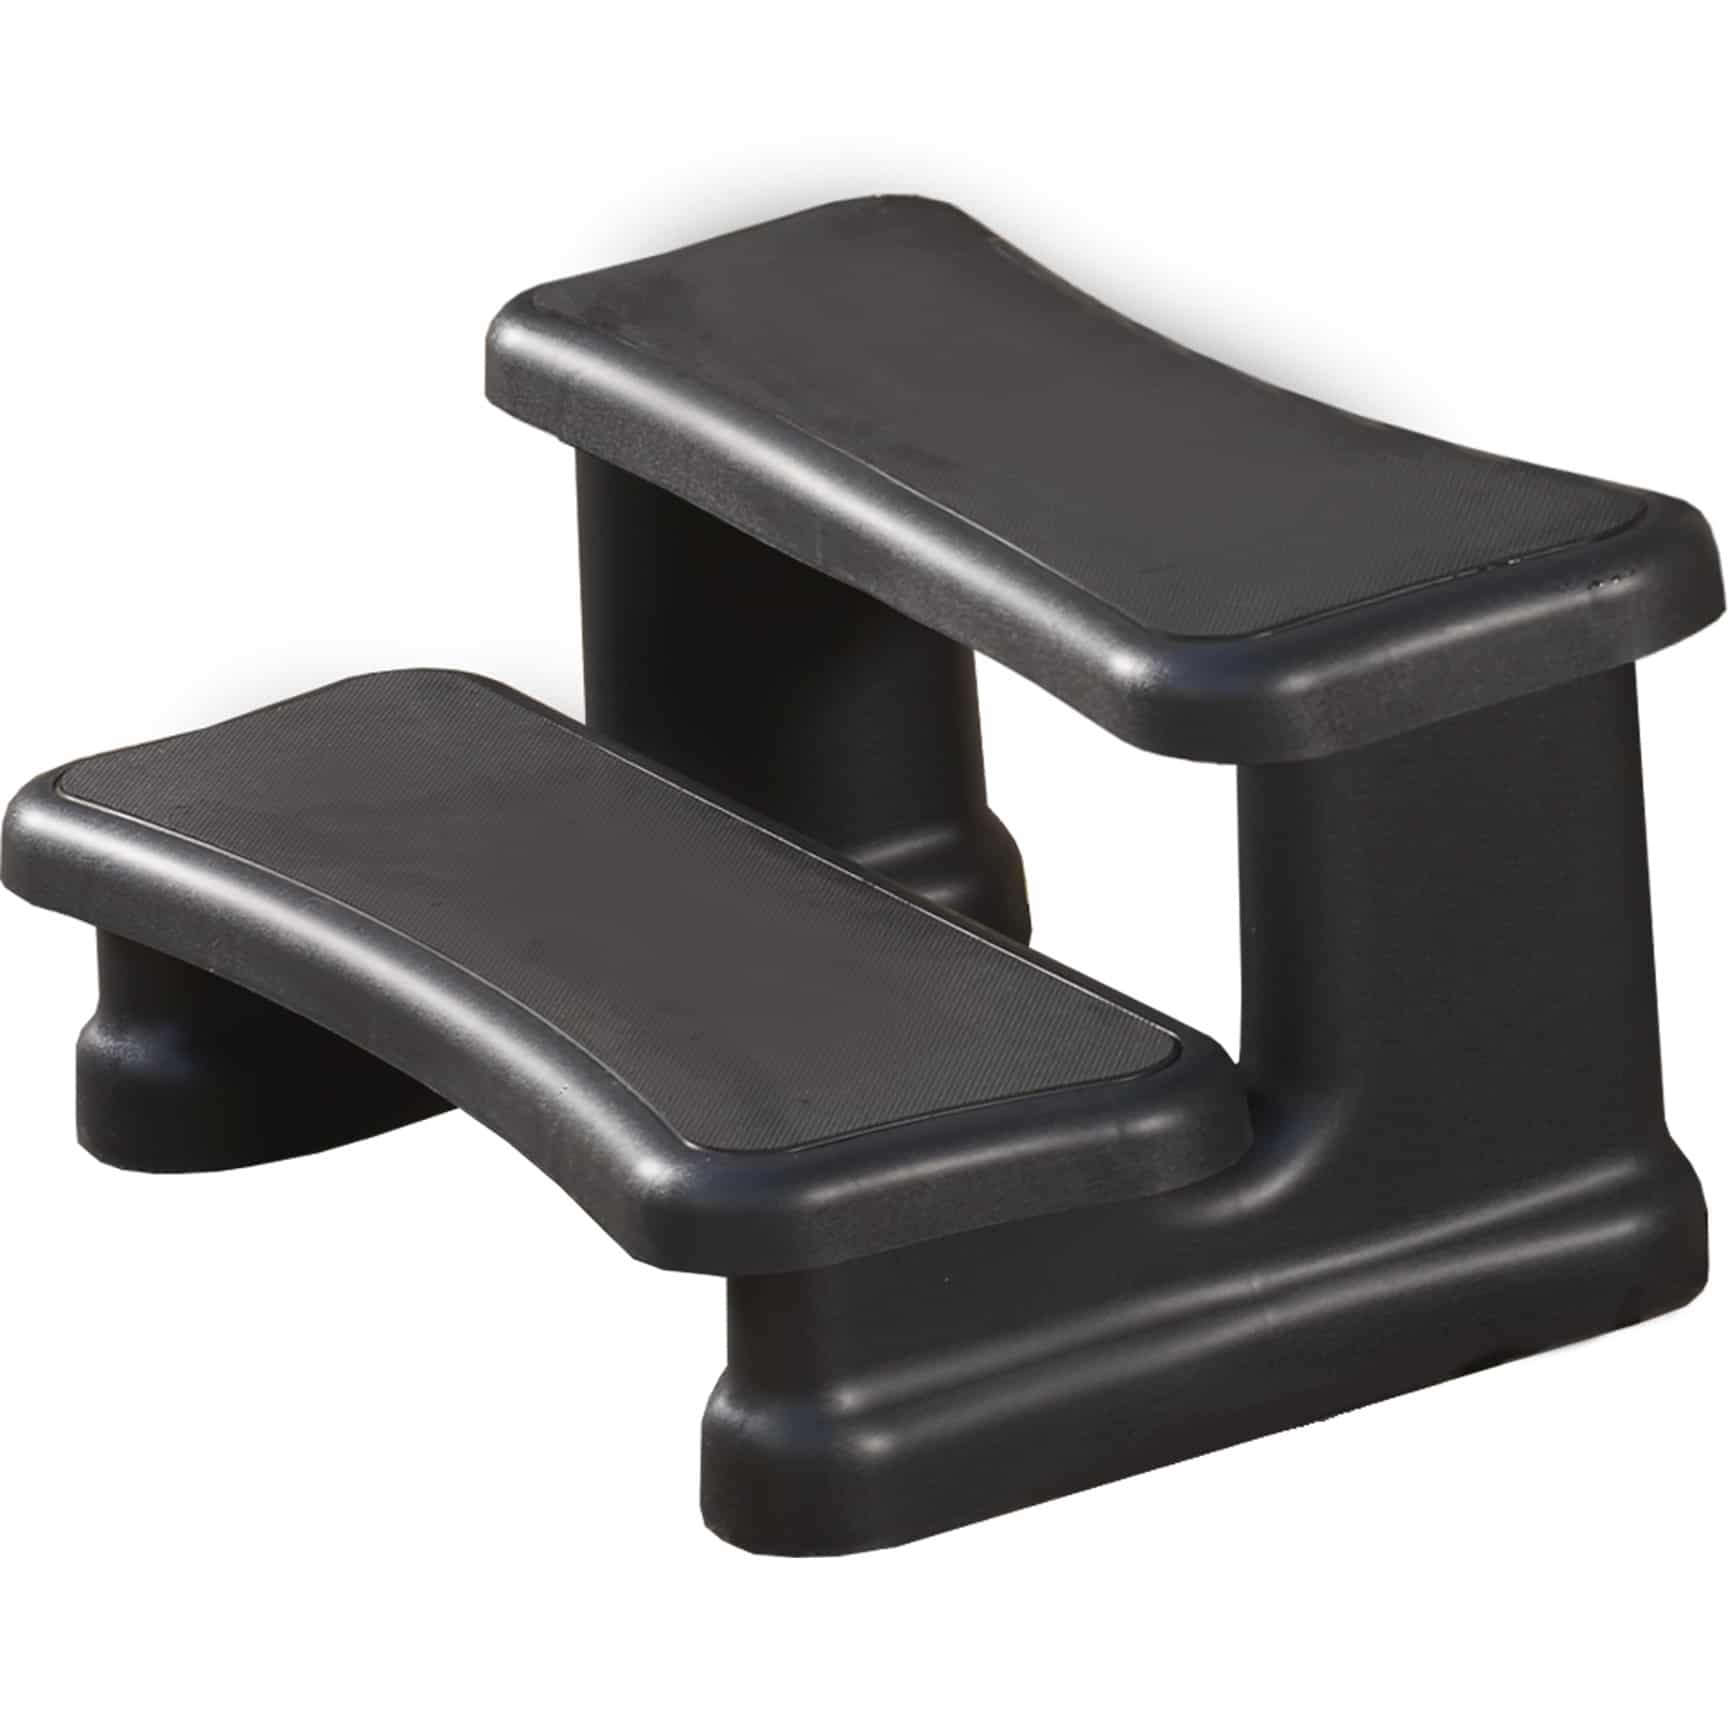 Handisteps Add-On-black spa steps